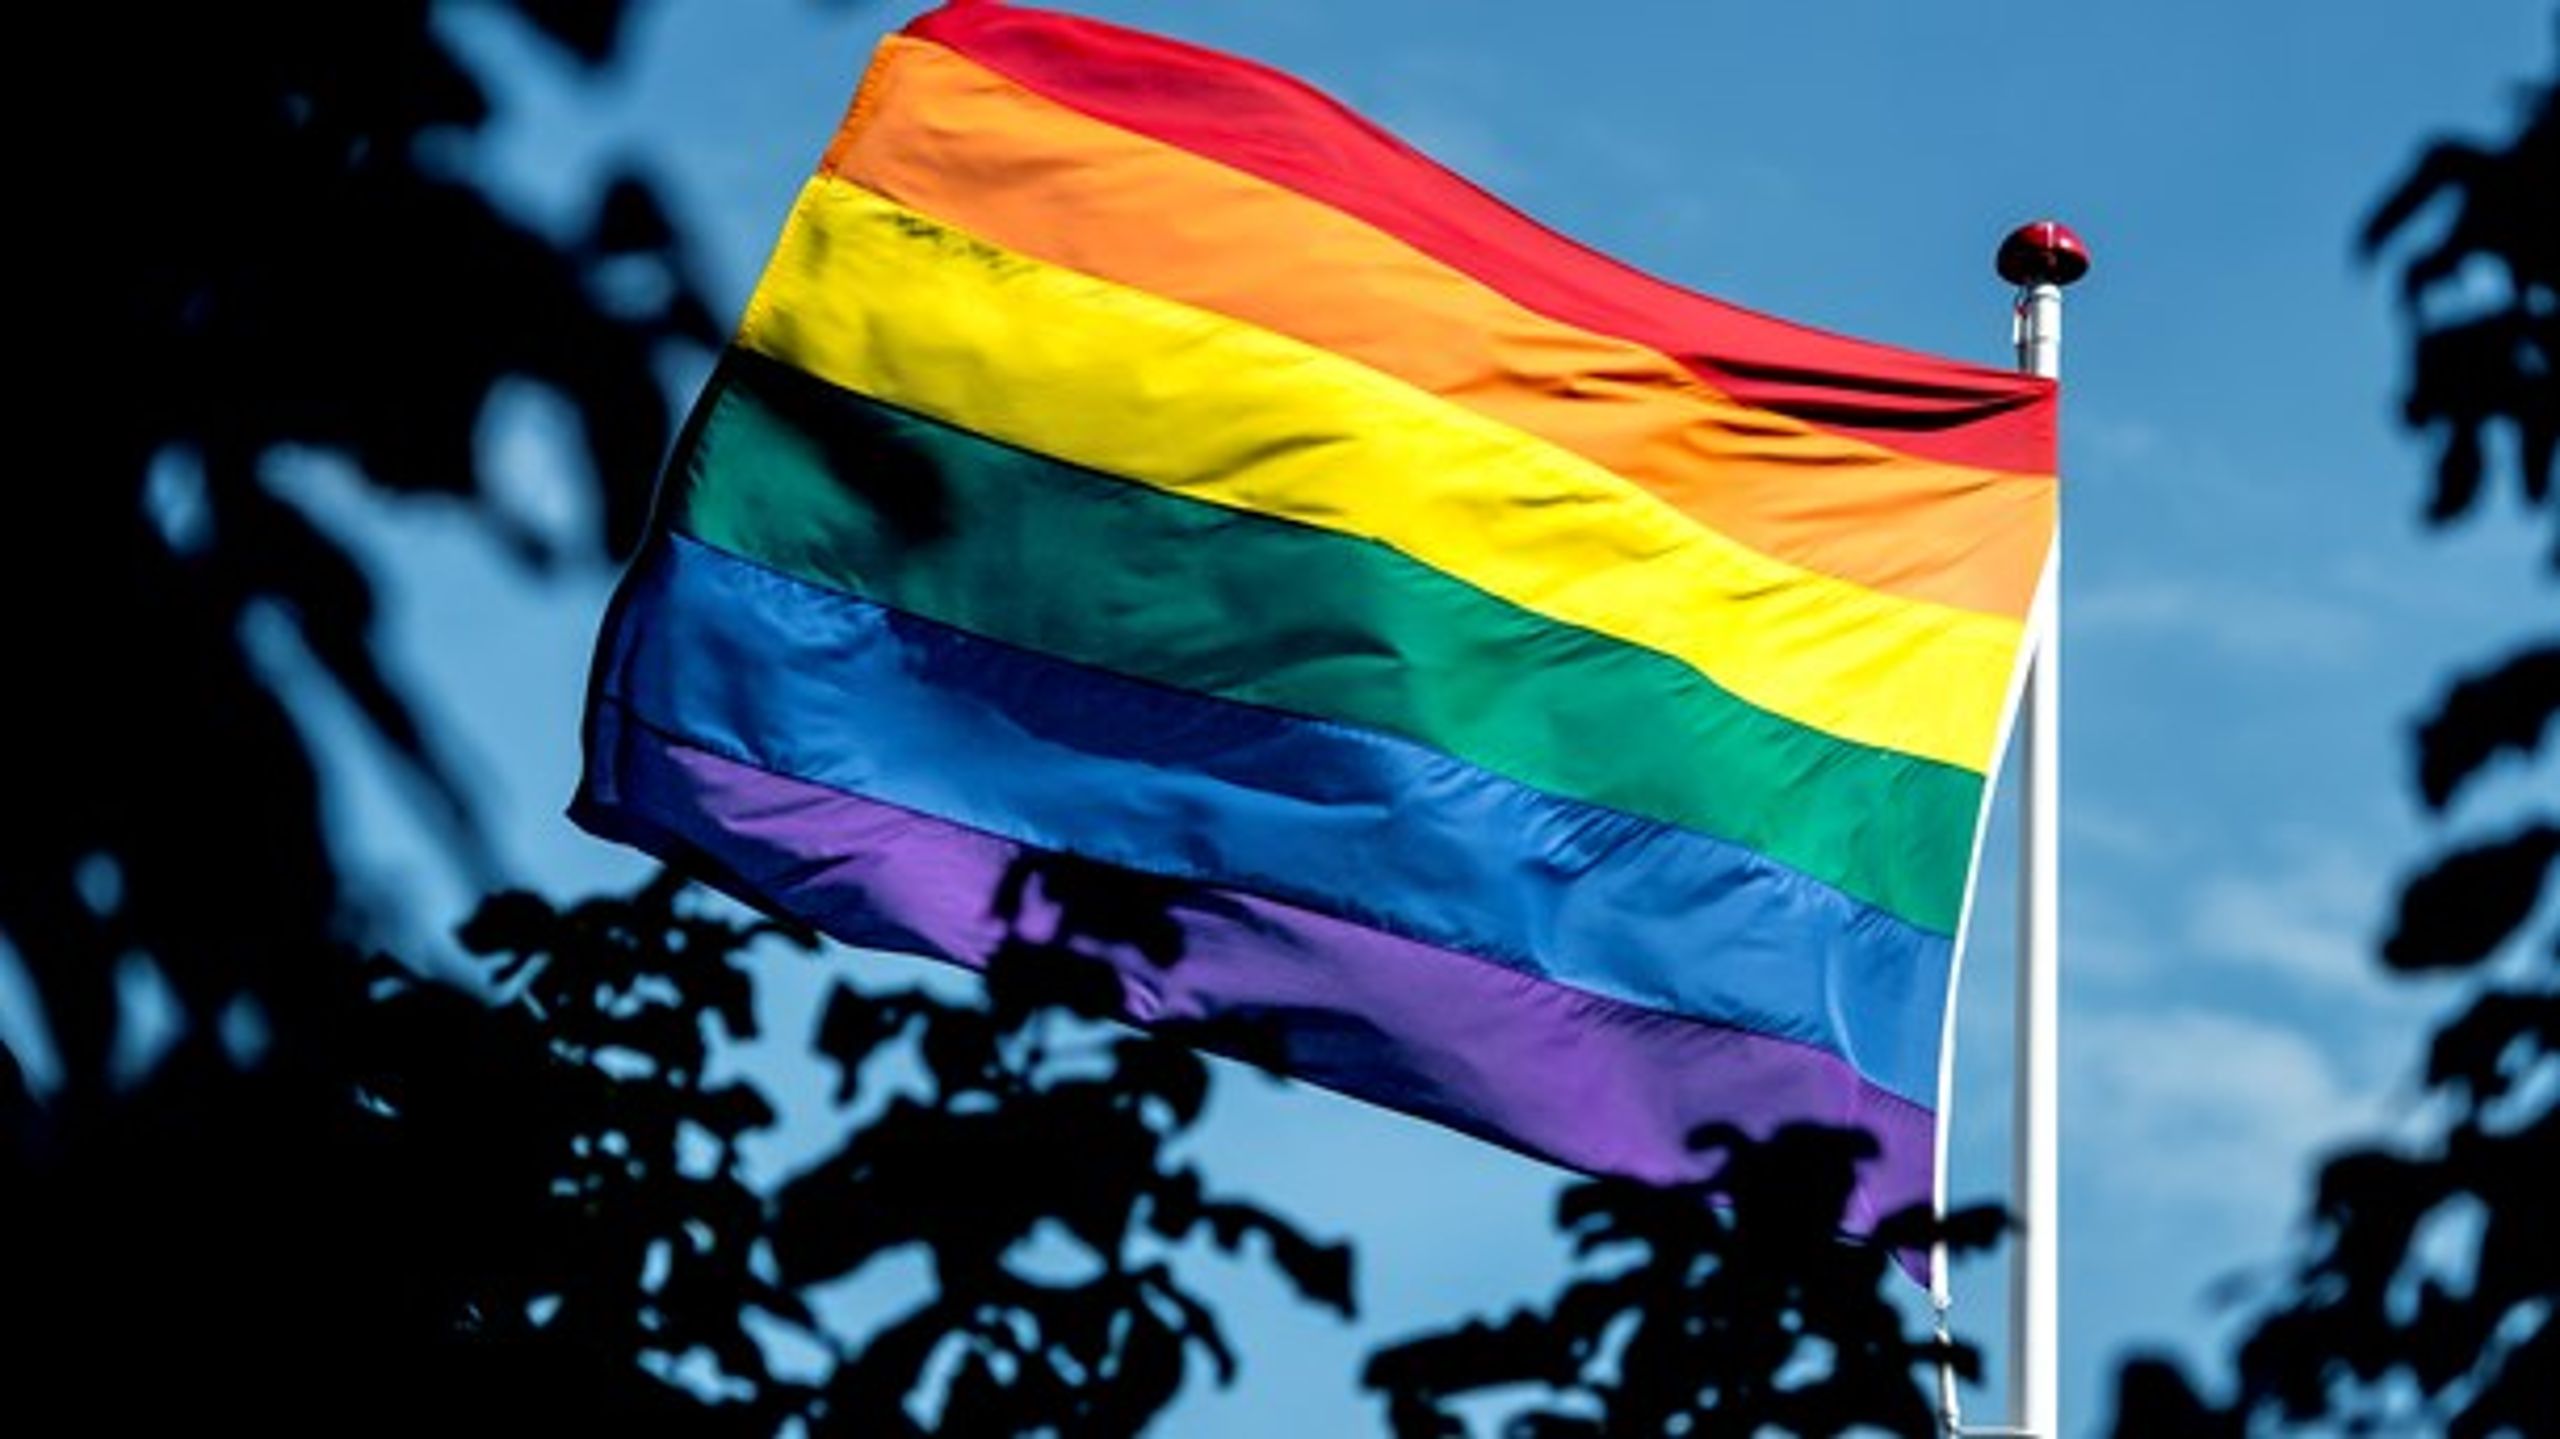 At være kristen homoseksuel kan være dobbelt stigmatiserende, skriver Peter Nissen.